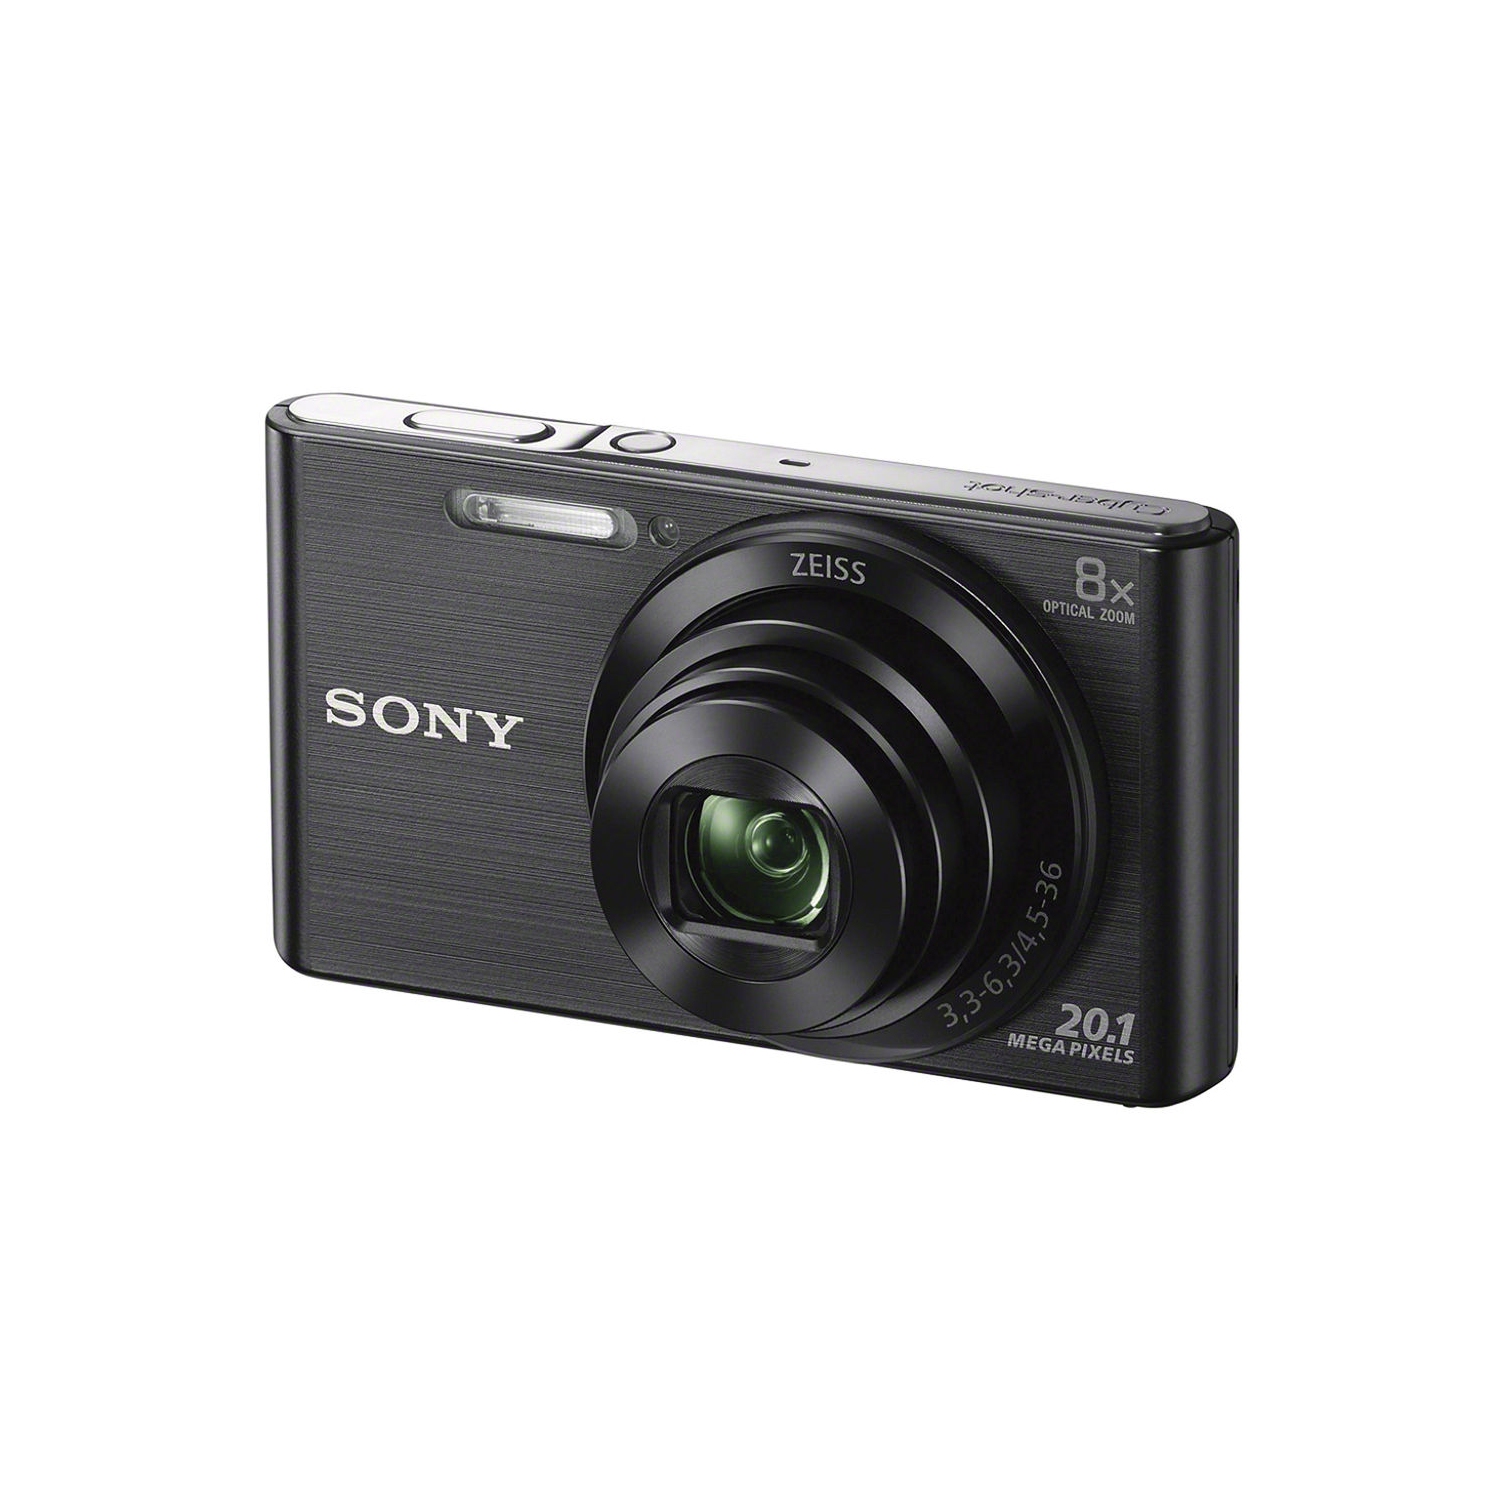 Sony DSC-W830 Digital Camera (Black) - DSCW830/B